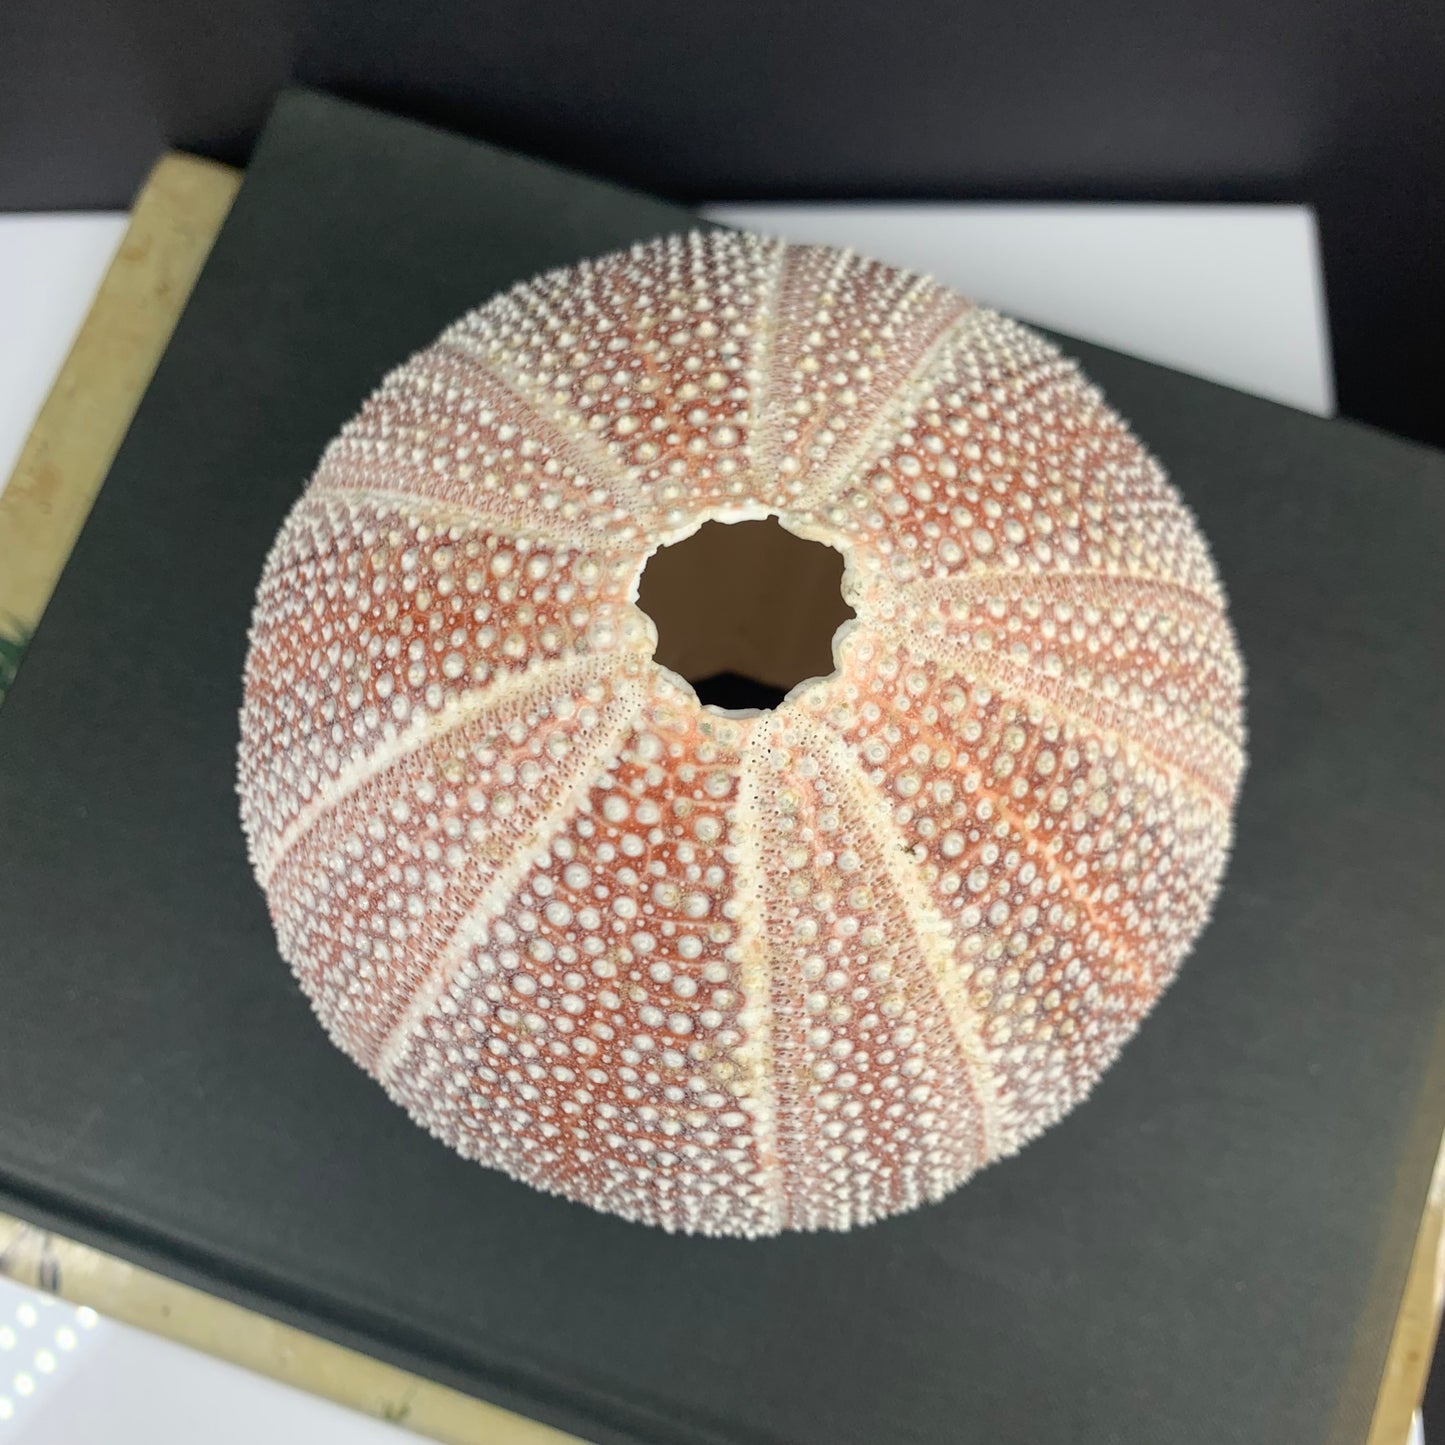 Antique taxiderm sea urchin